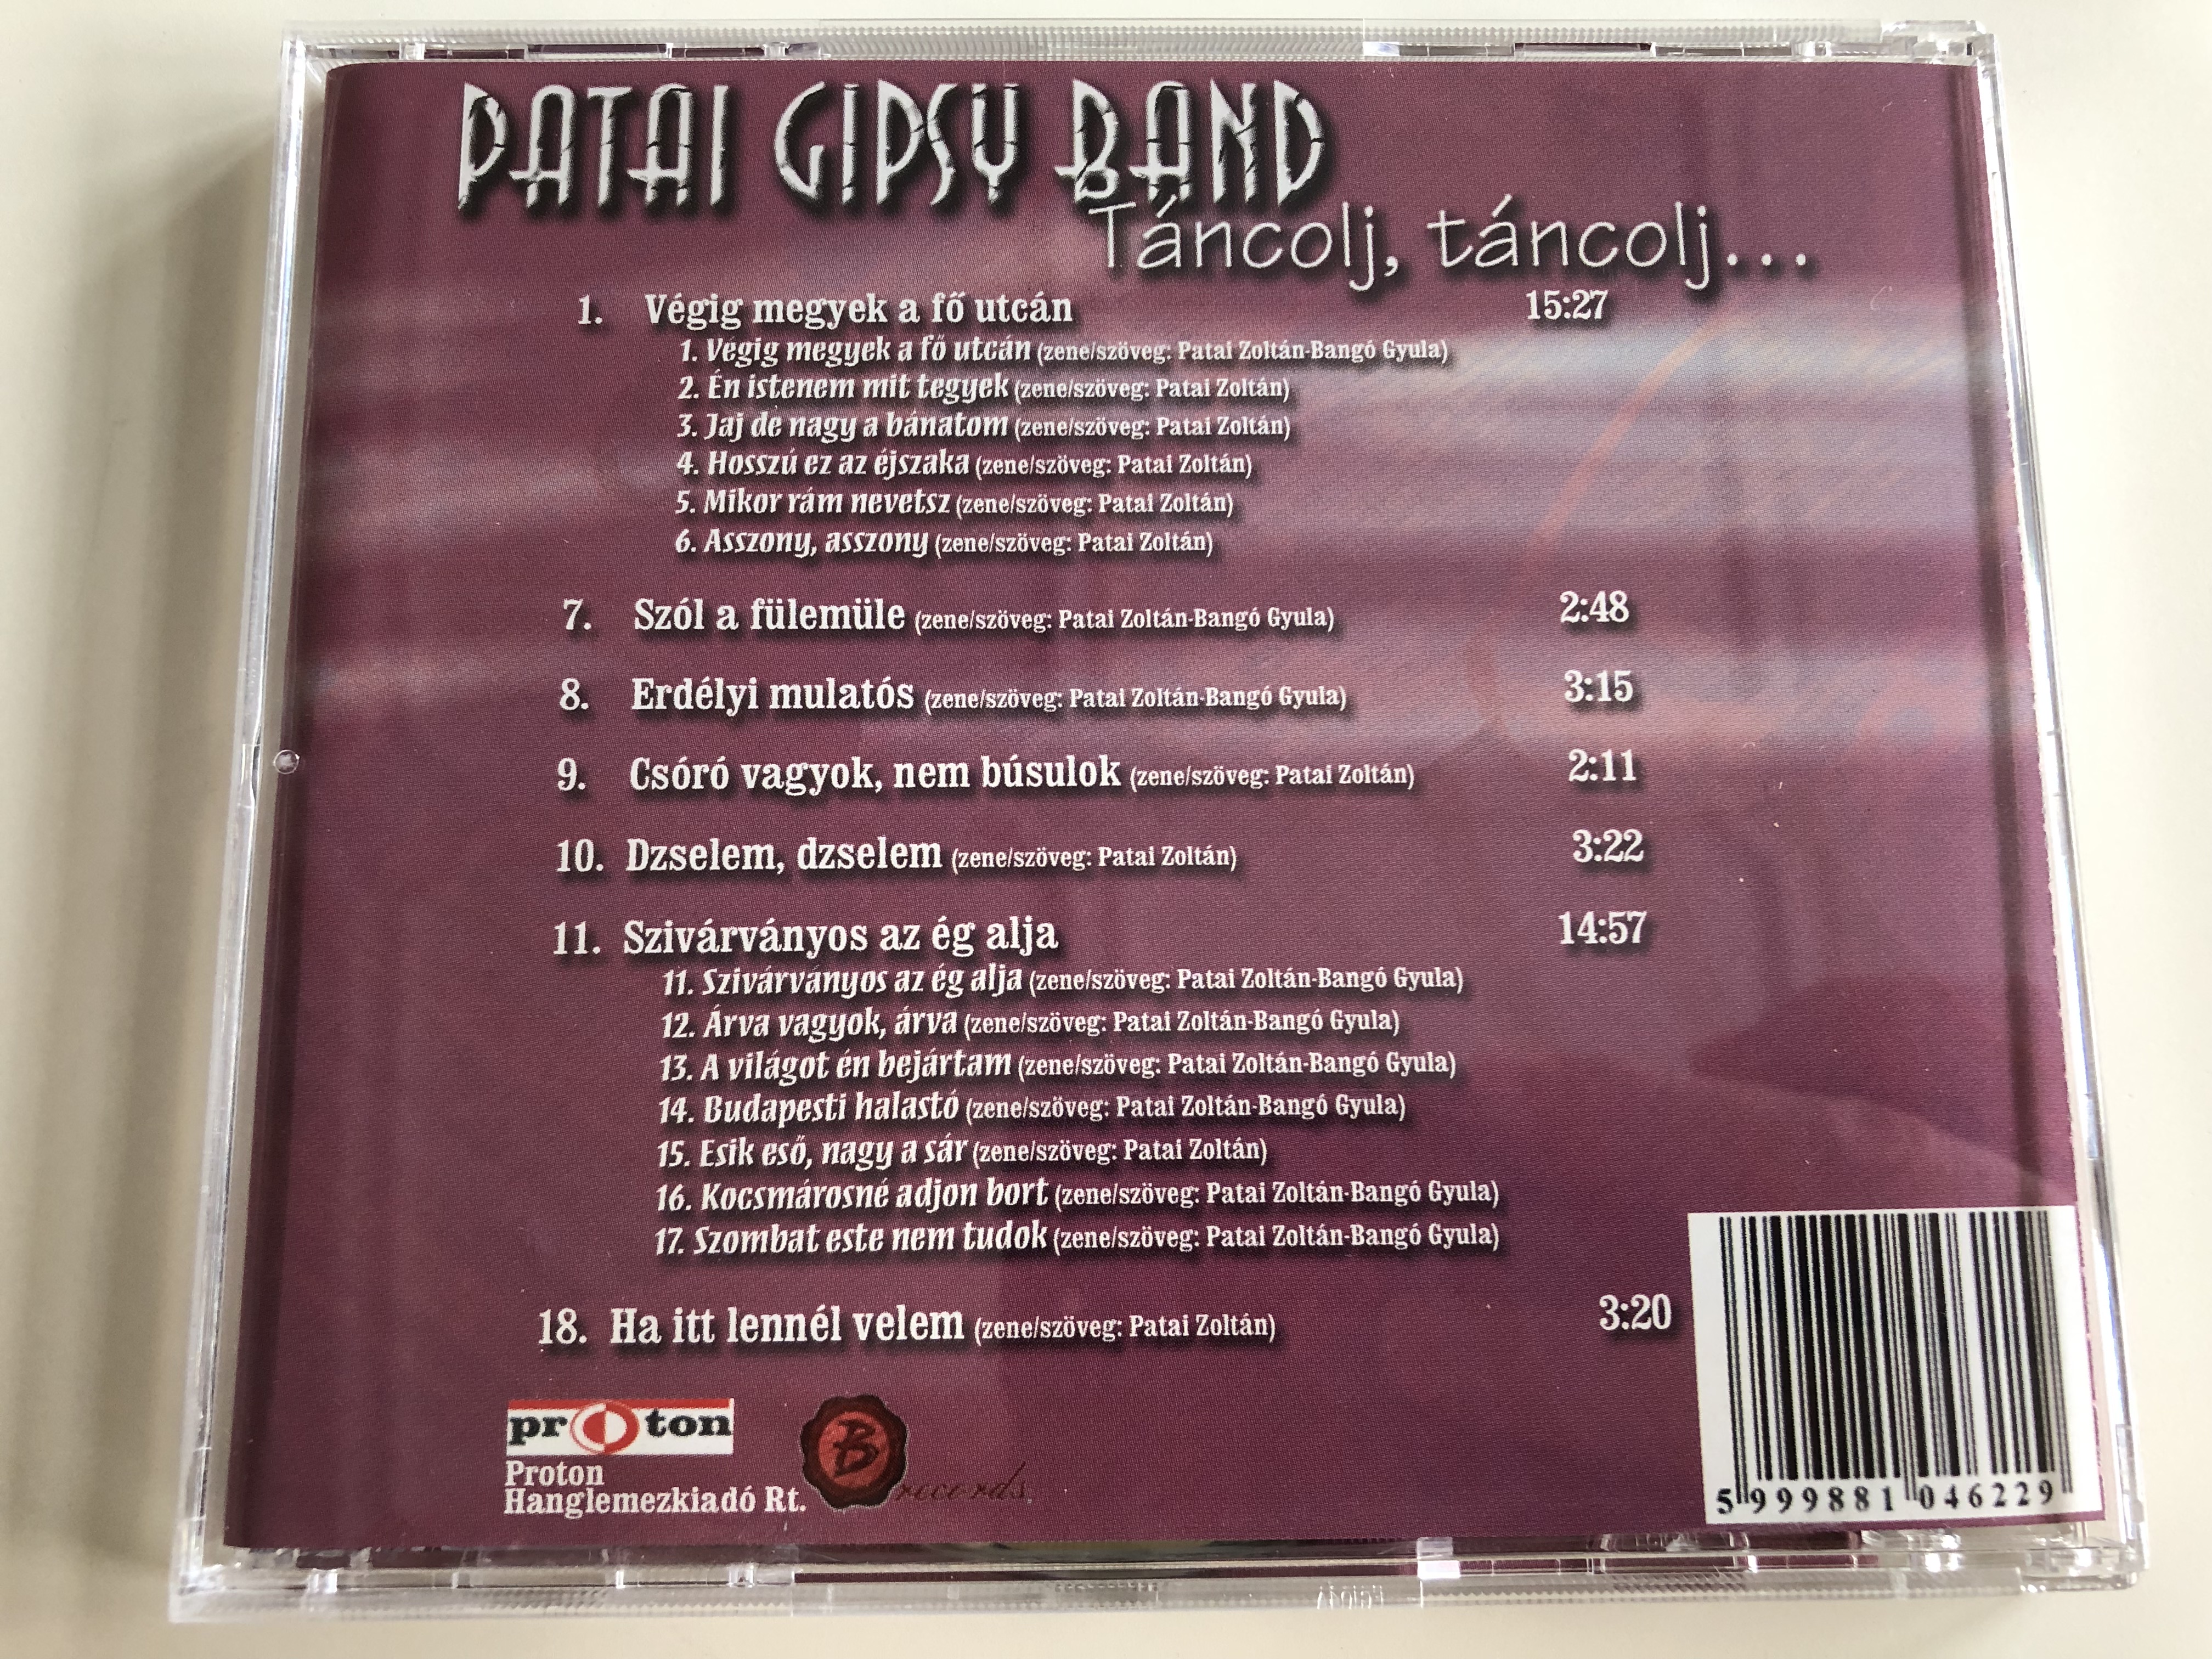 patai-gypsy-band-t-ncolj-t-ncolj-audio-cd-2004-proton-pr-cd-8810462-2-5-.jpg